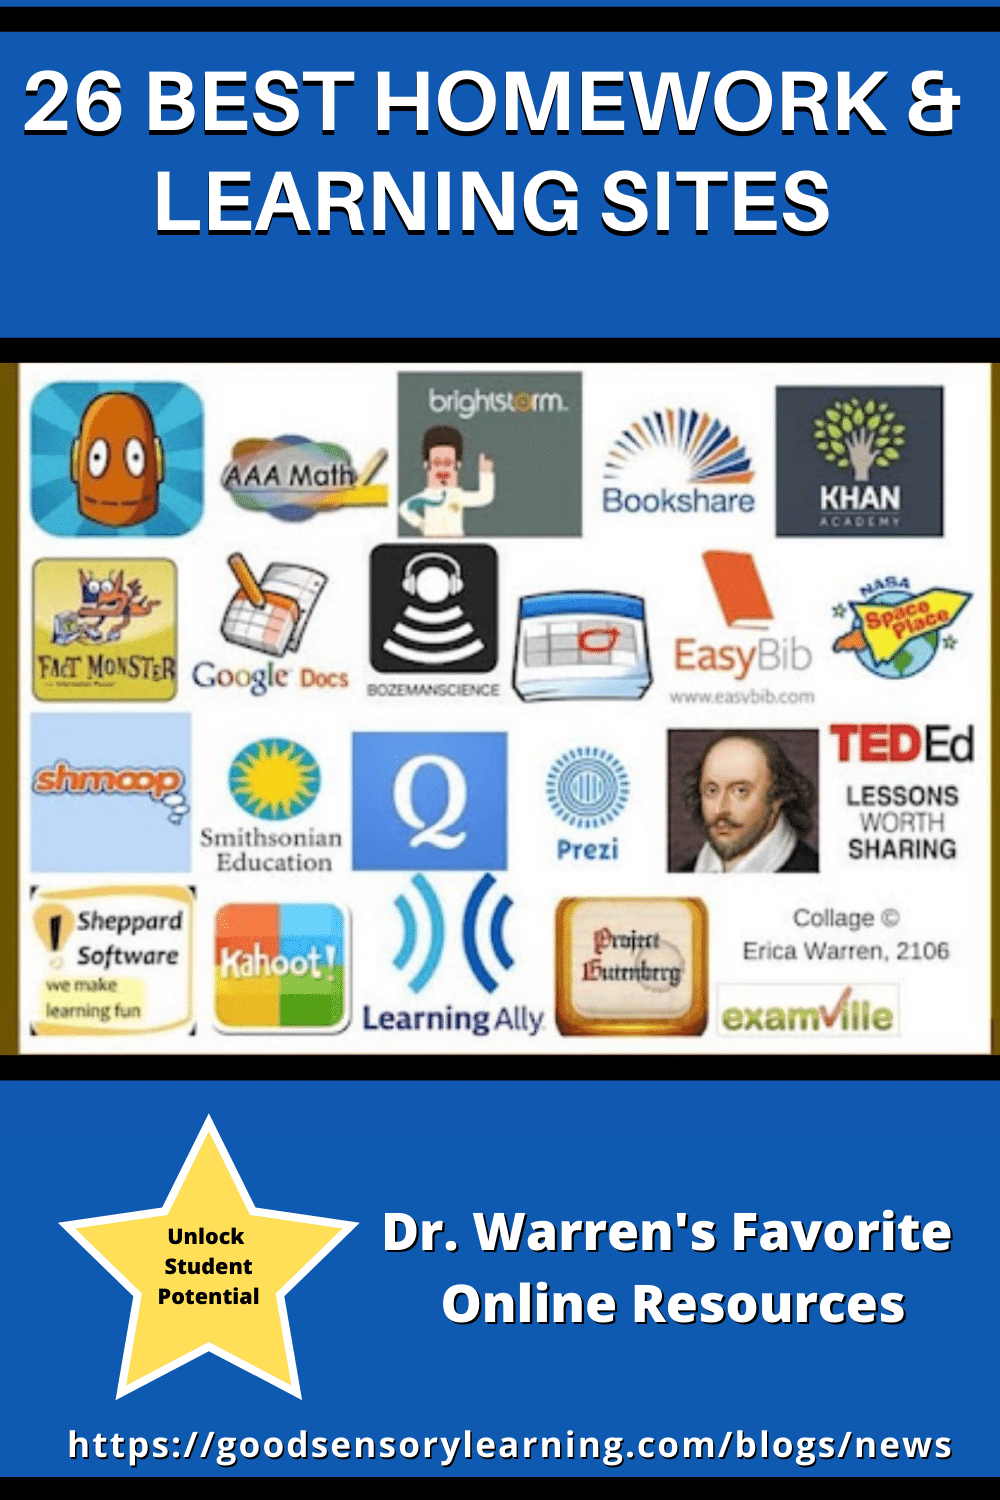 Dr. Warren's favorite learning sites